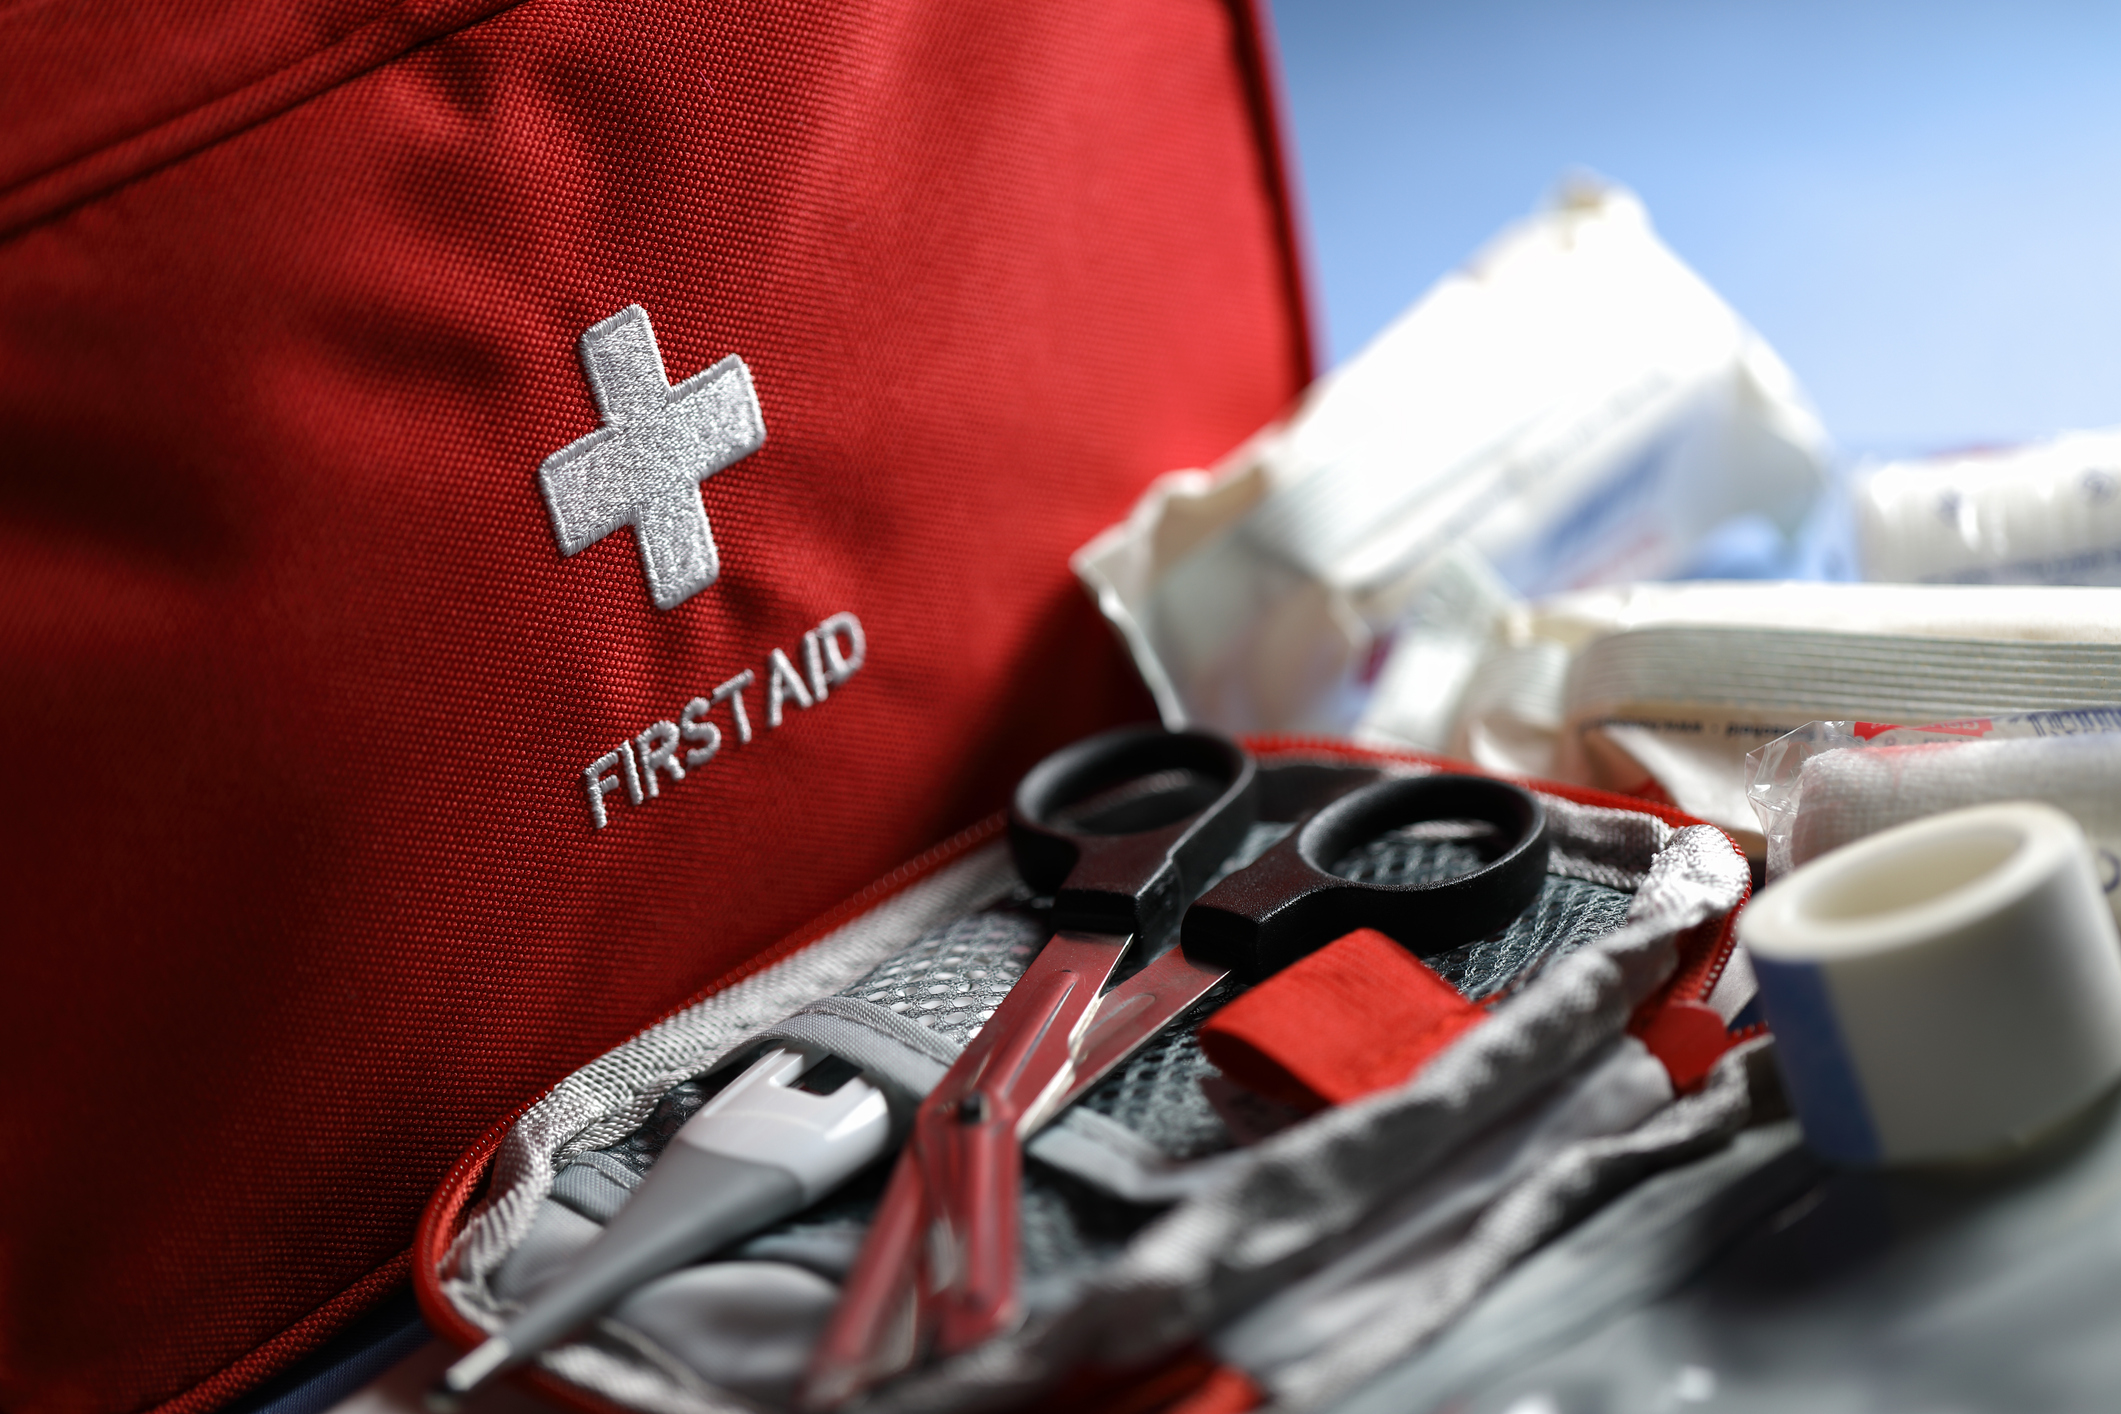 OSHA first aid requirements